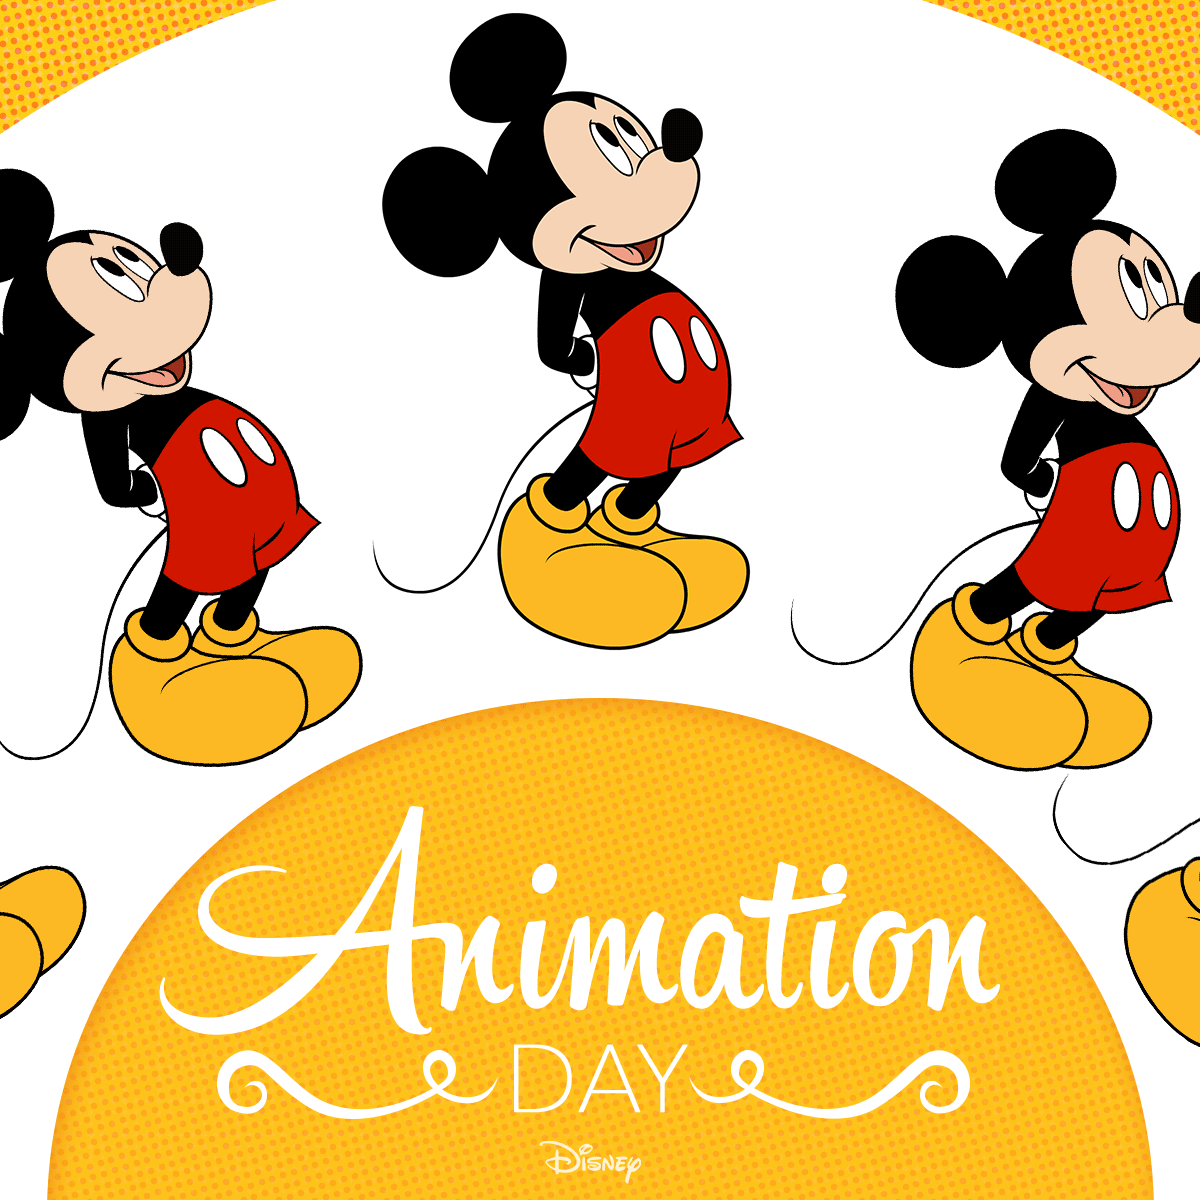 Disney — “Cartoon animation offers a medium of storytelling...